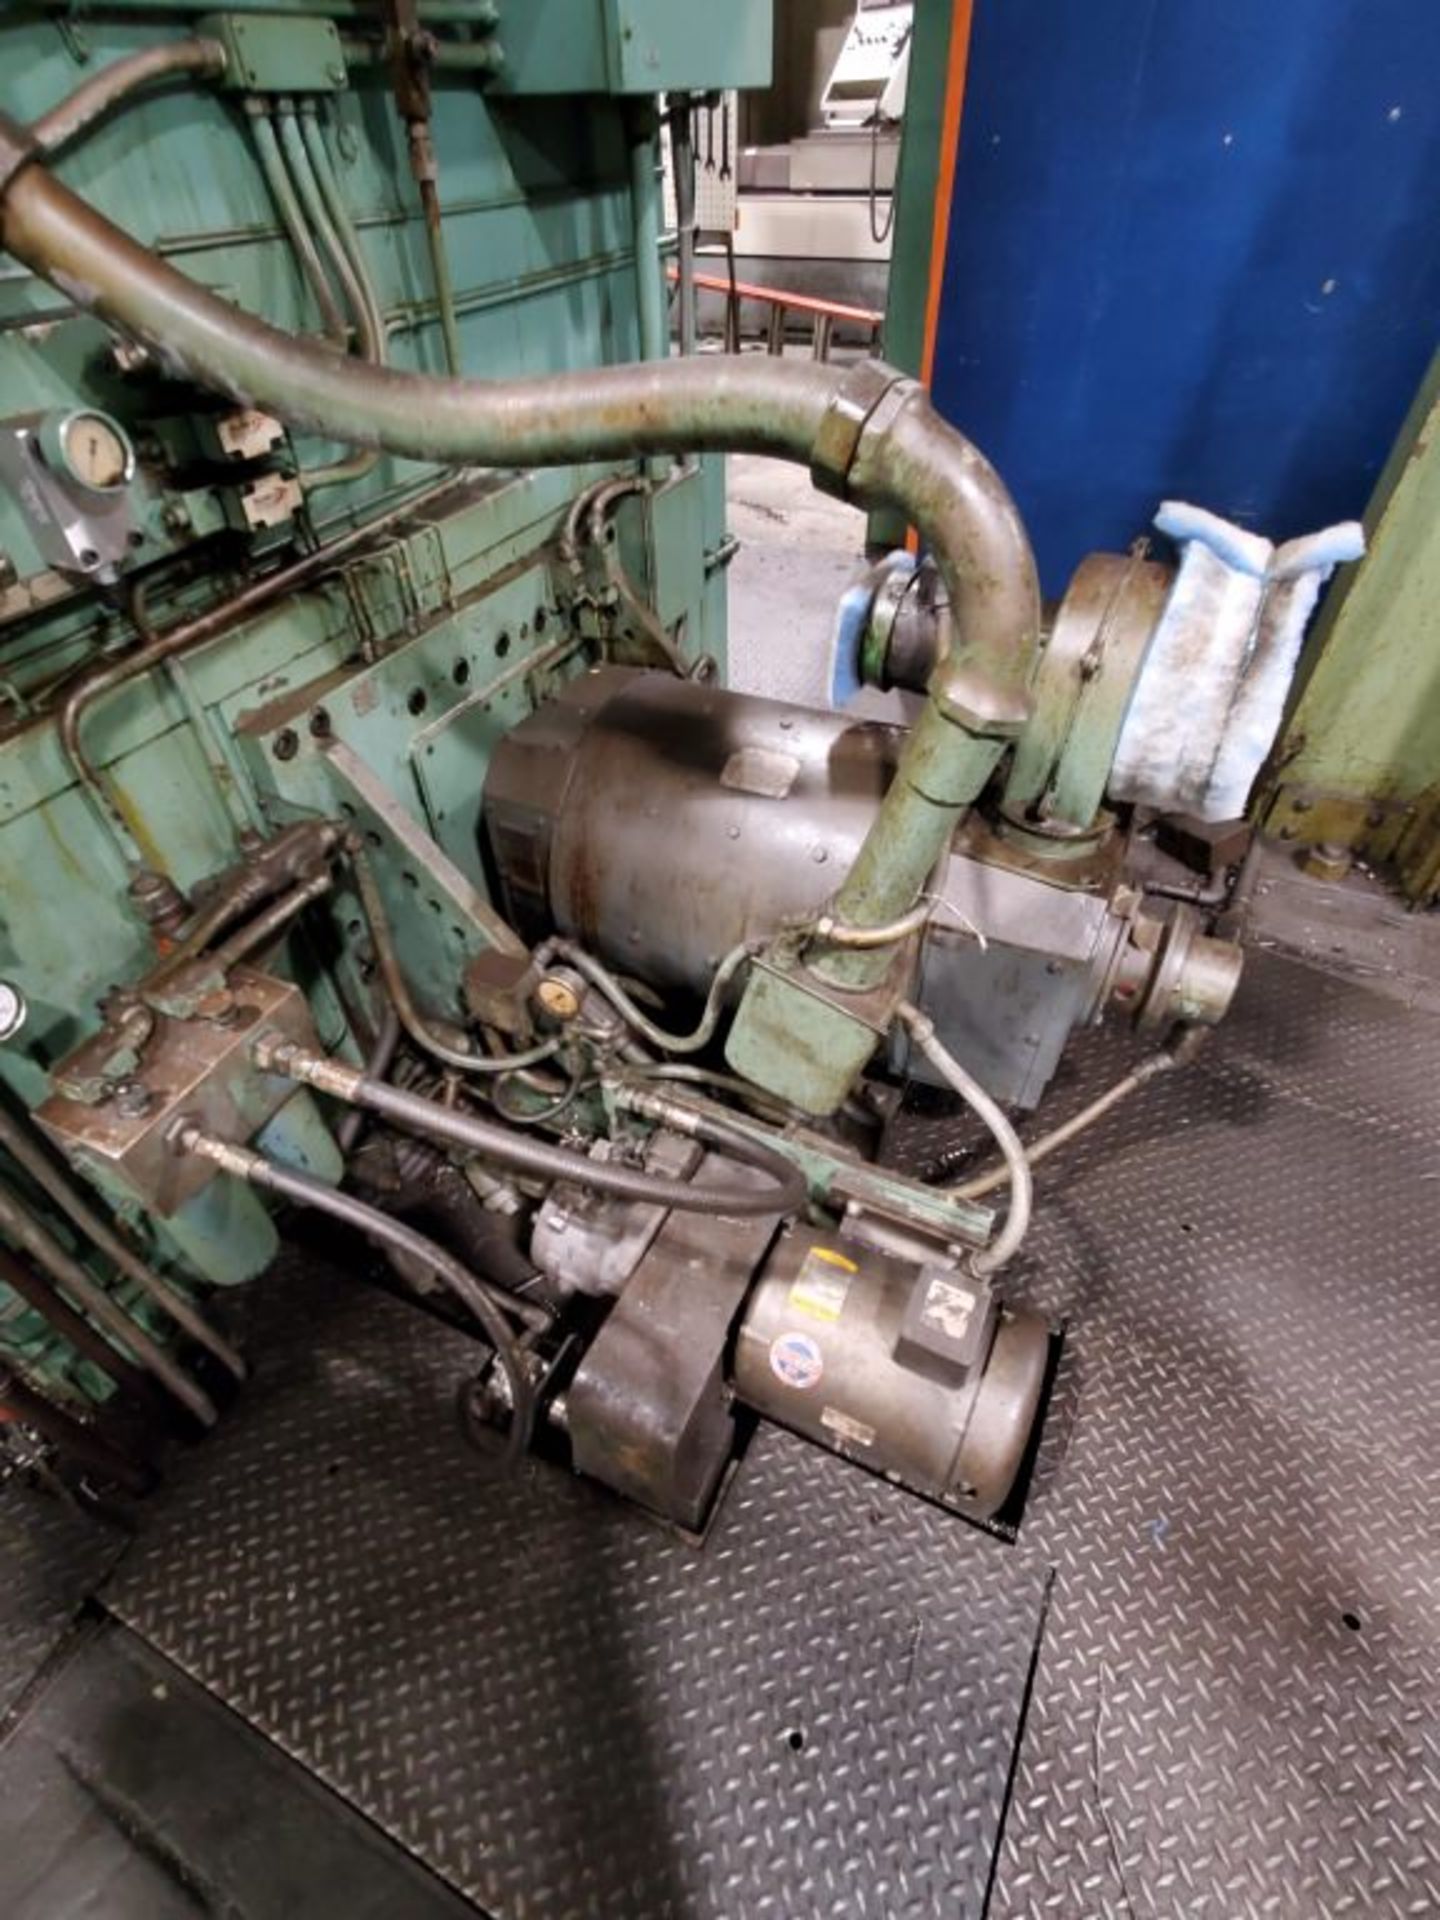 Giddings & Lewis VTC-60 CNC Vertical Boring Mill - Image 11 of 13